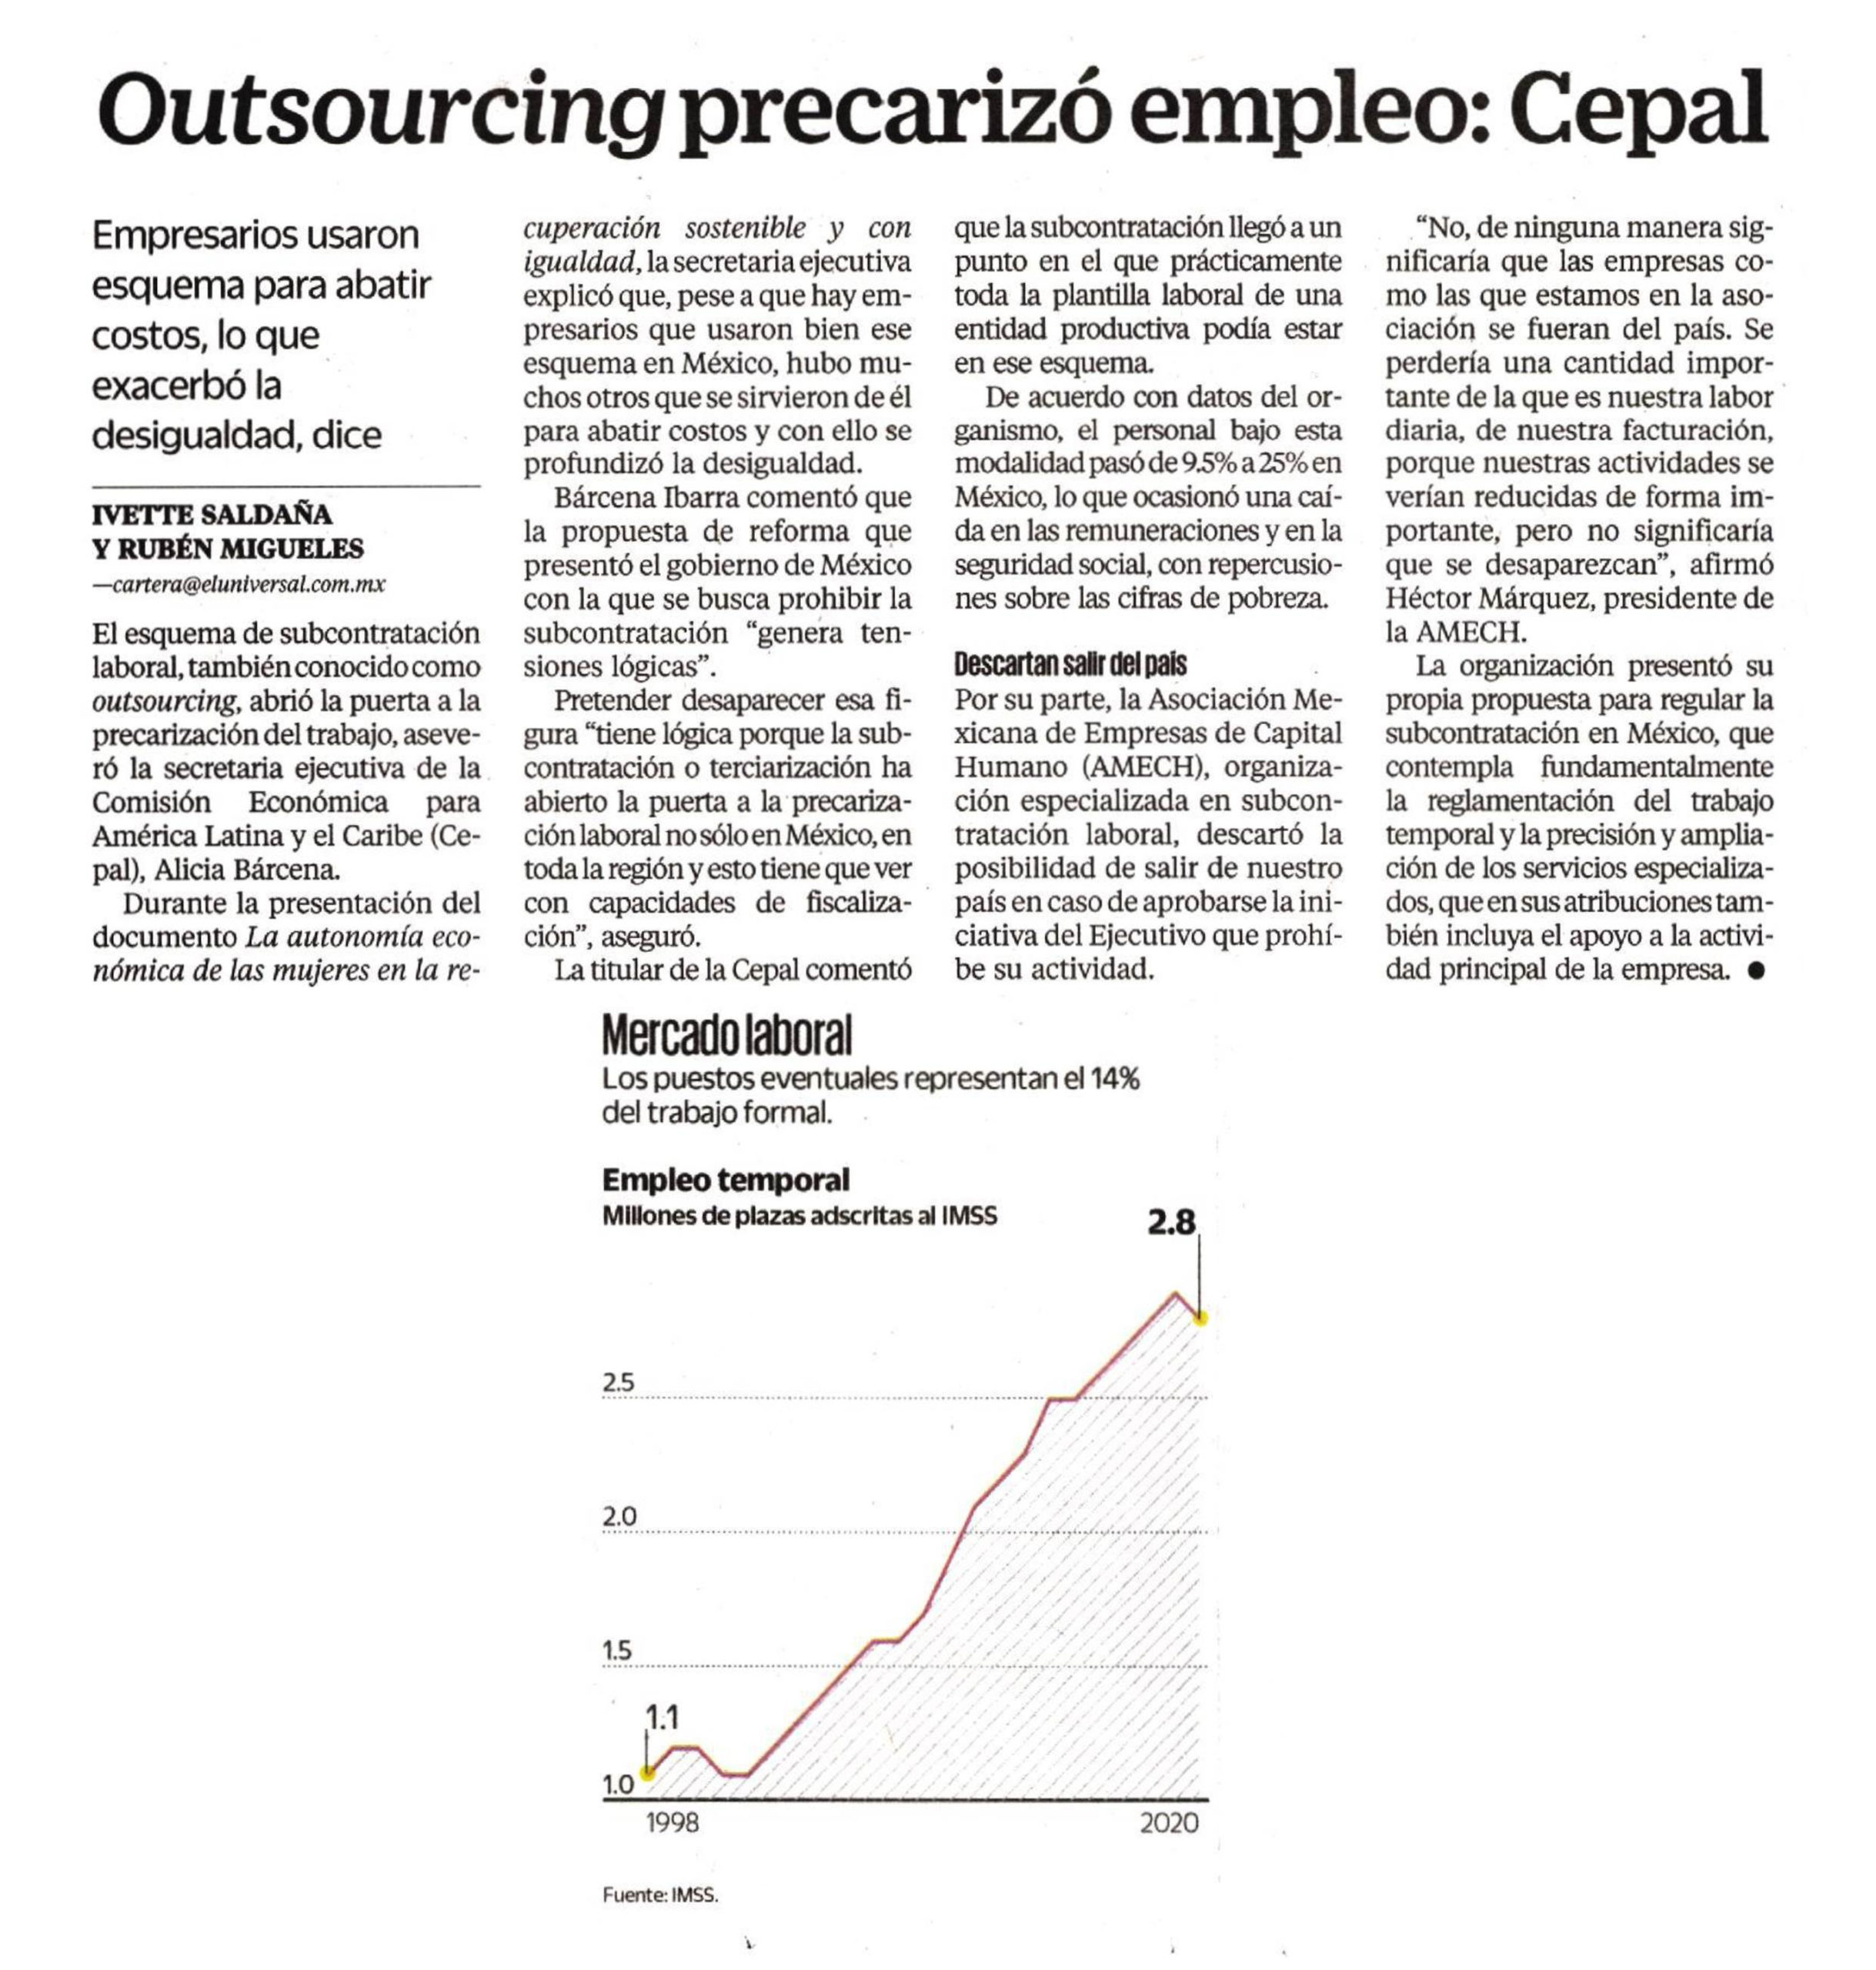 Outsourcing precarizó empleo: Cepal